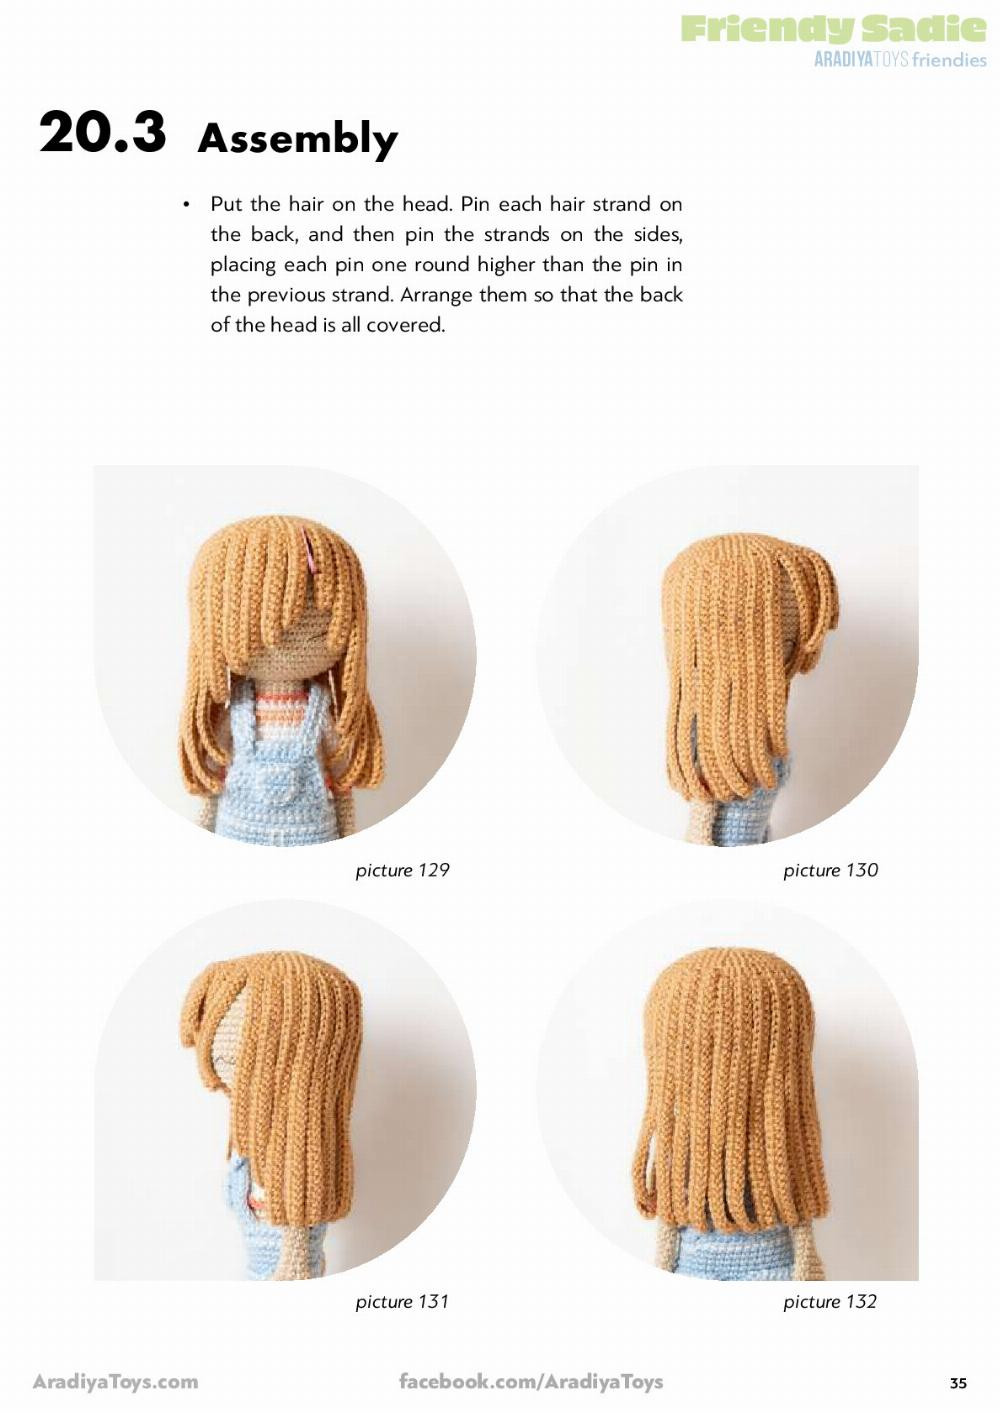 Friendy Sadie AradiyaToys friendies, Crochet pattern for a little girl doll wearing overalls, a beanie hat and headphones